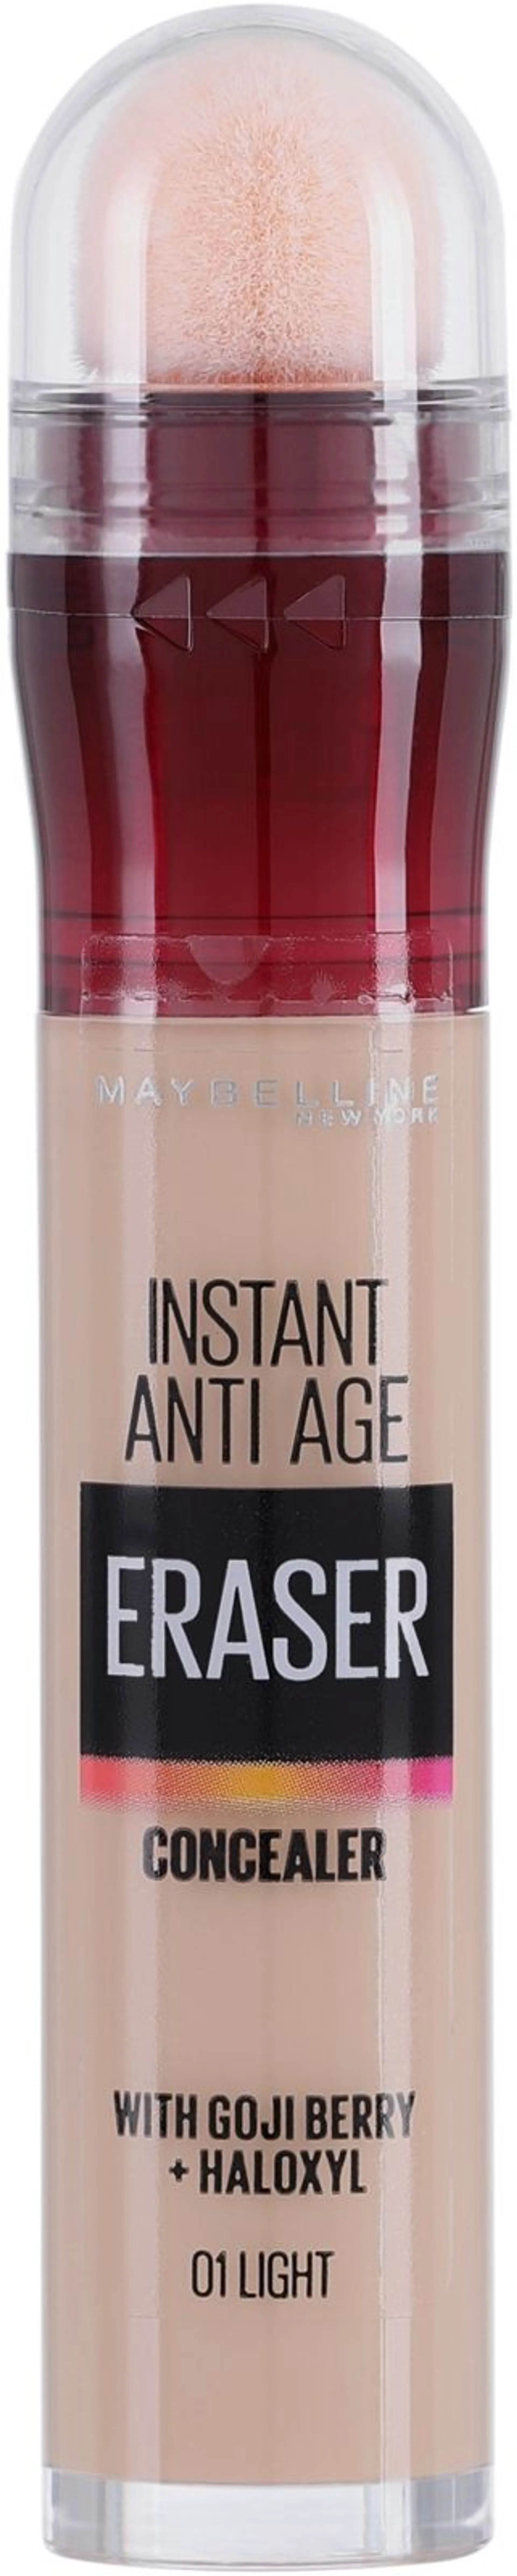 Maybelline New York Instant Anti Age Eraser 01 Light peitevoide 6,8ml 